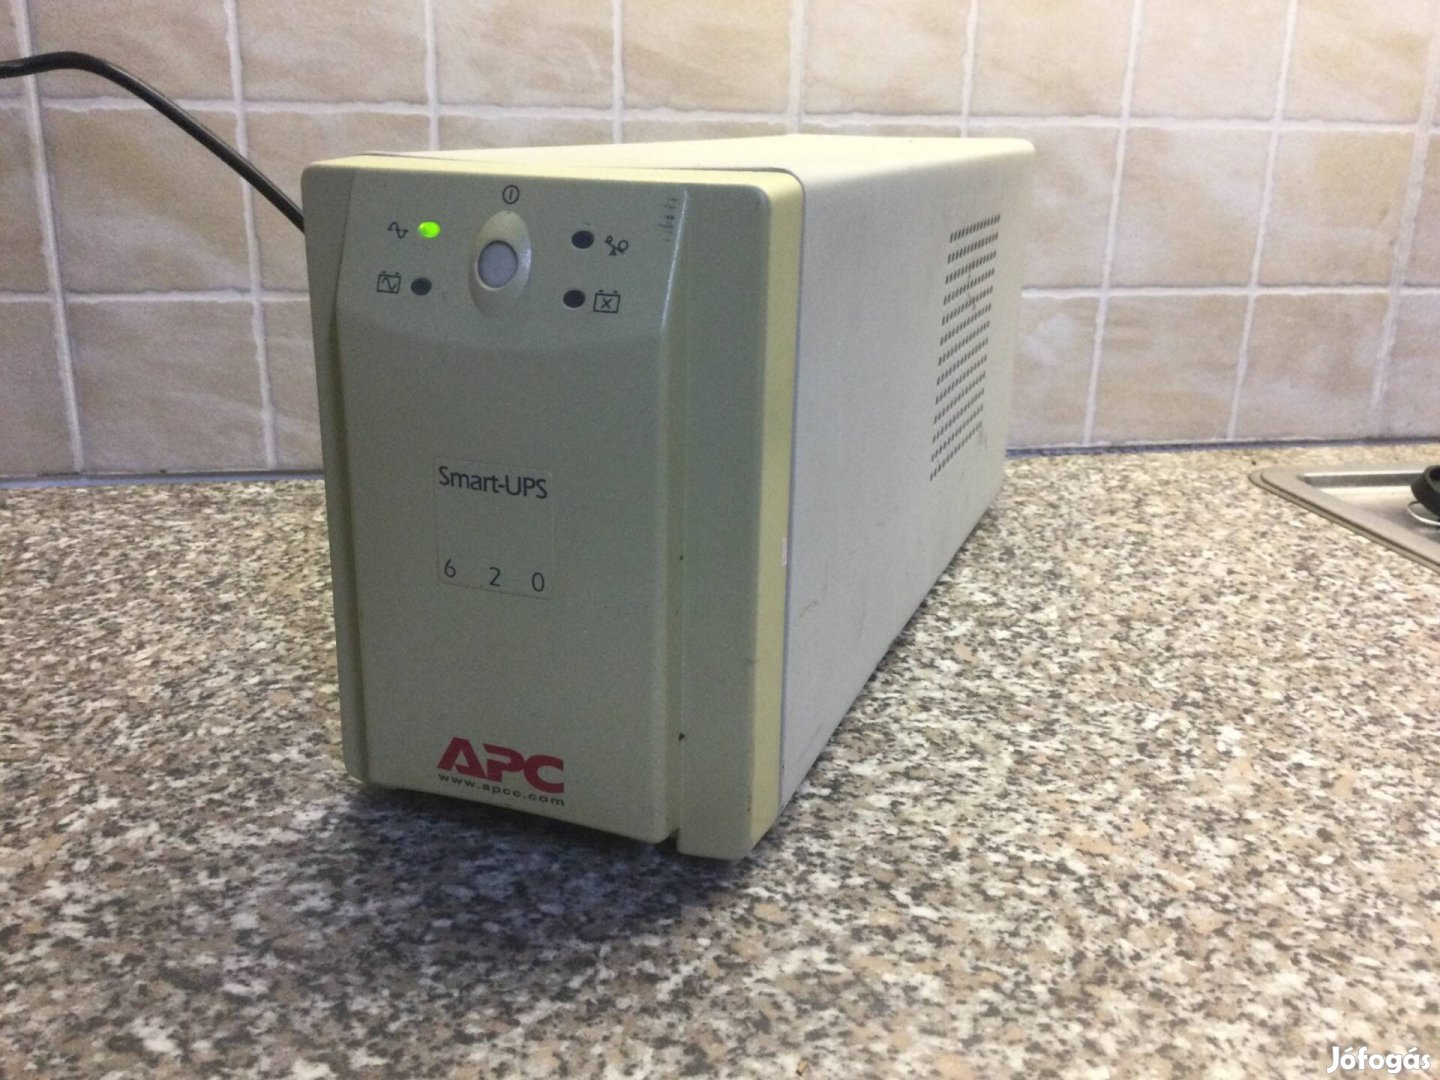 APC Smart UPS 620